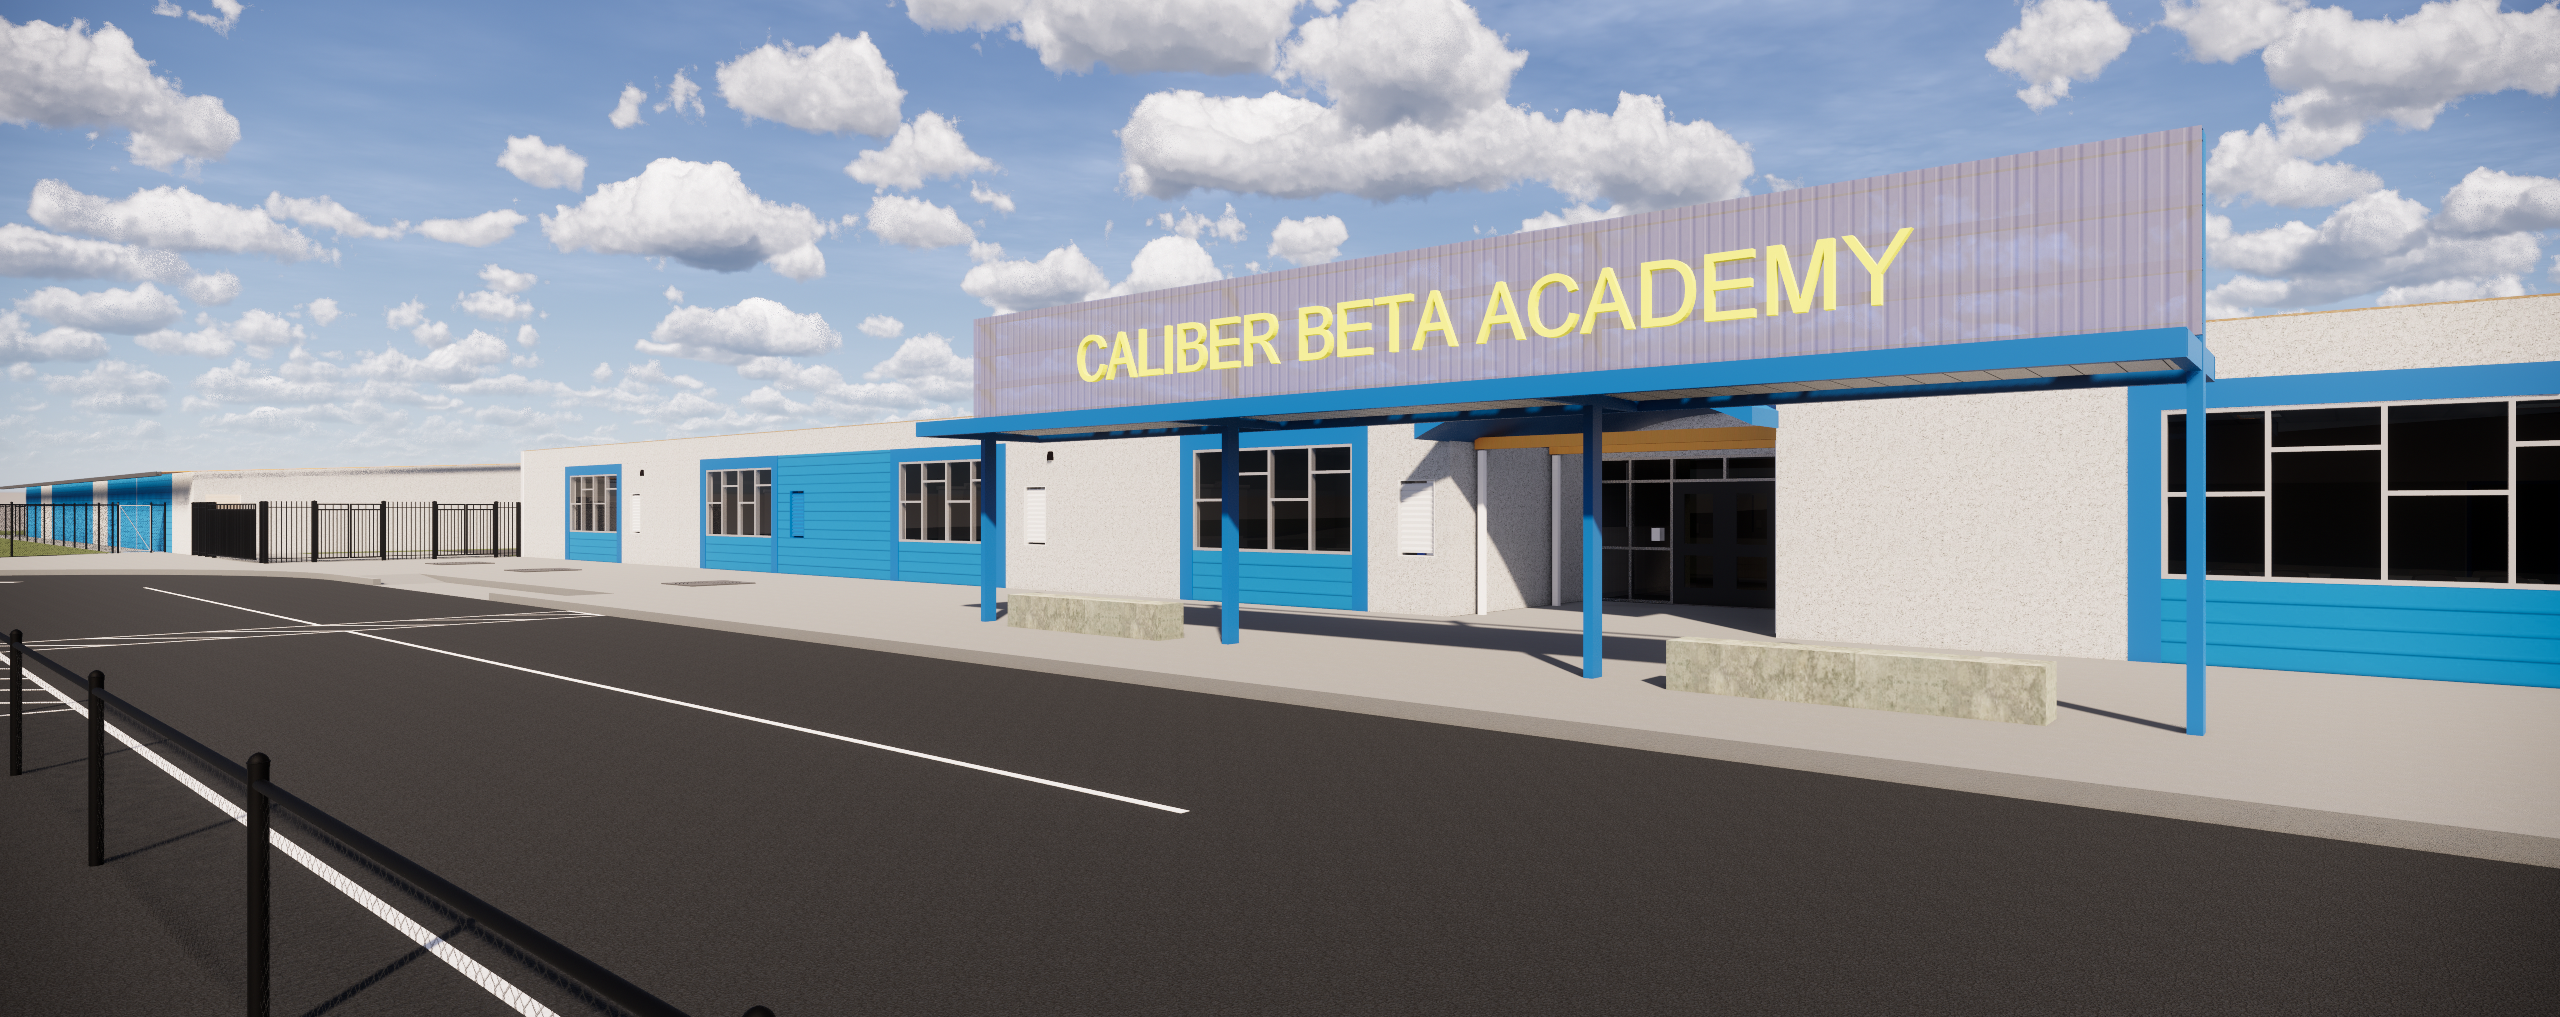 Caliber Beta Academy